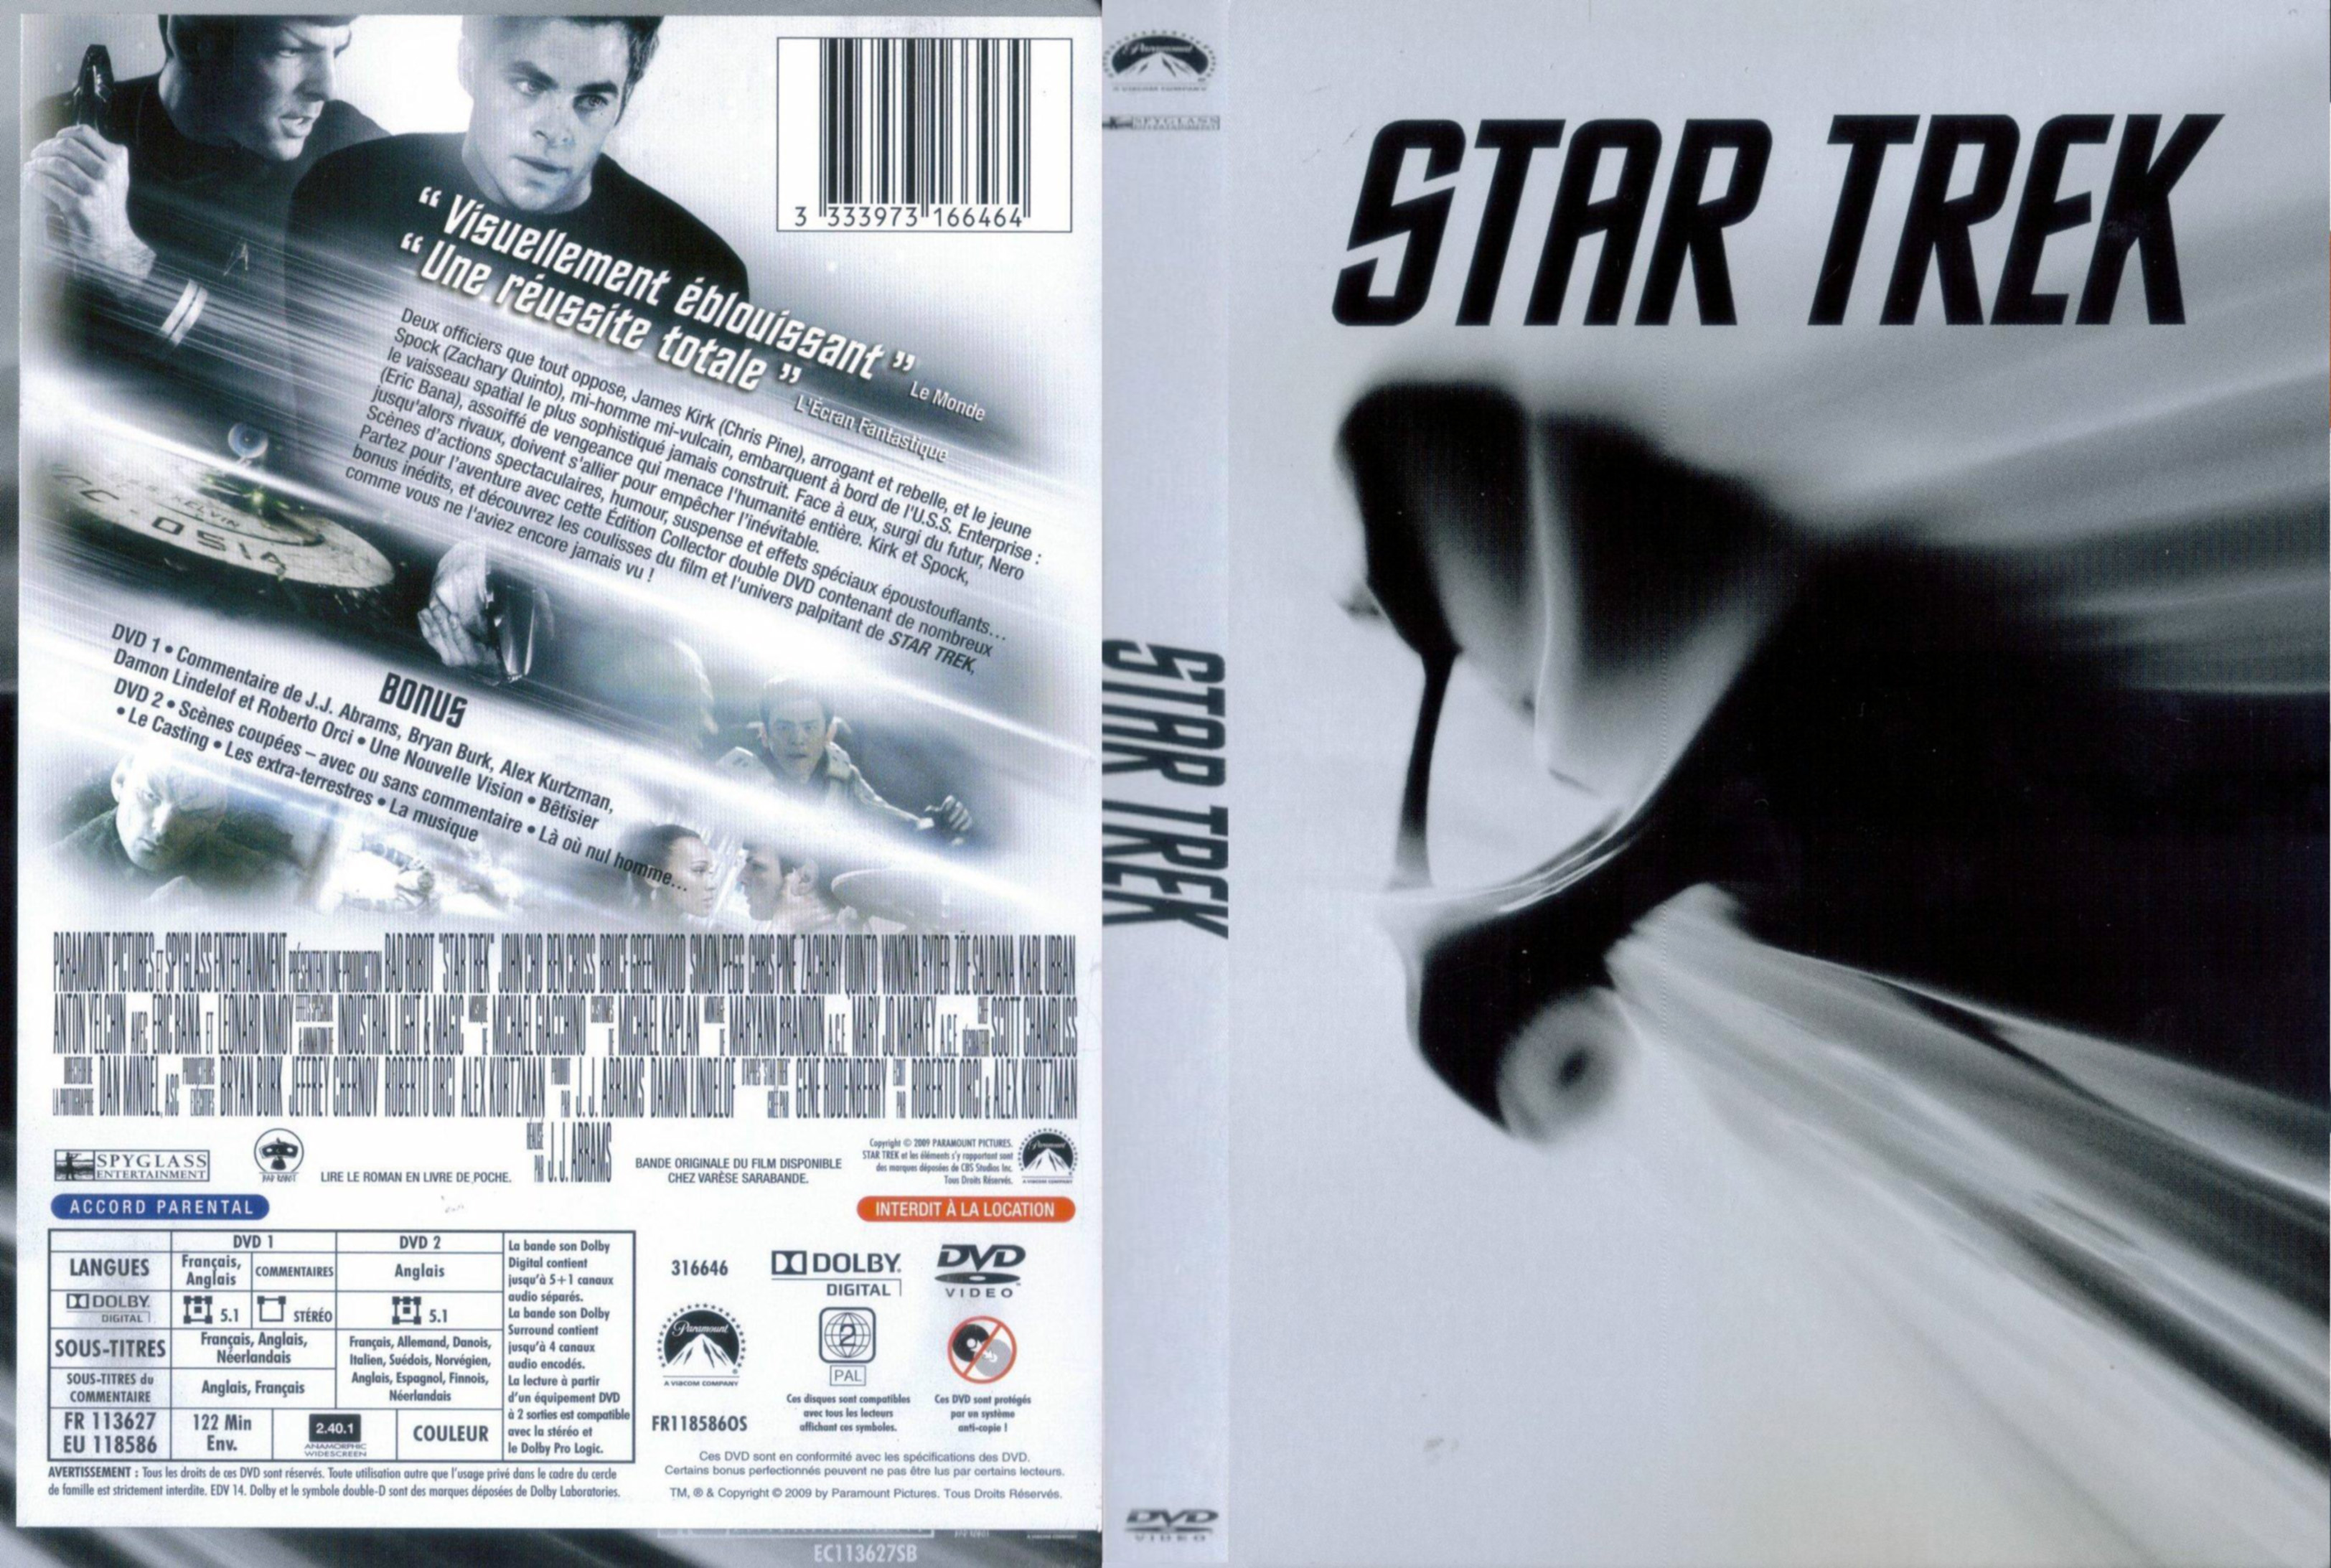 Jaquette DVD Star trek (2009) v2